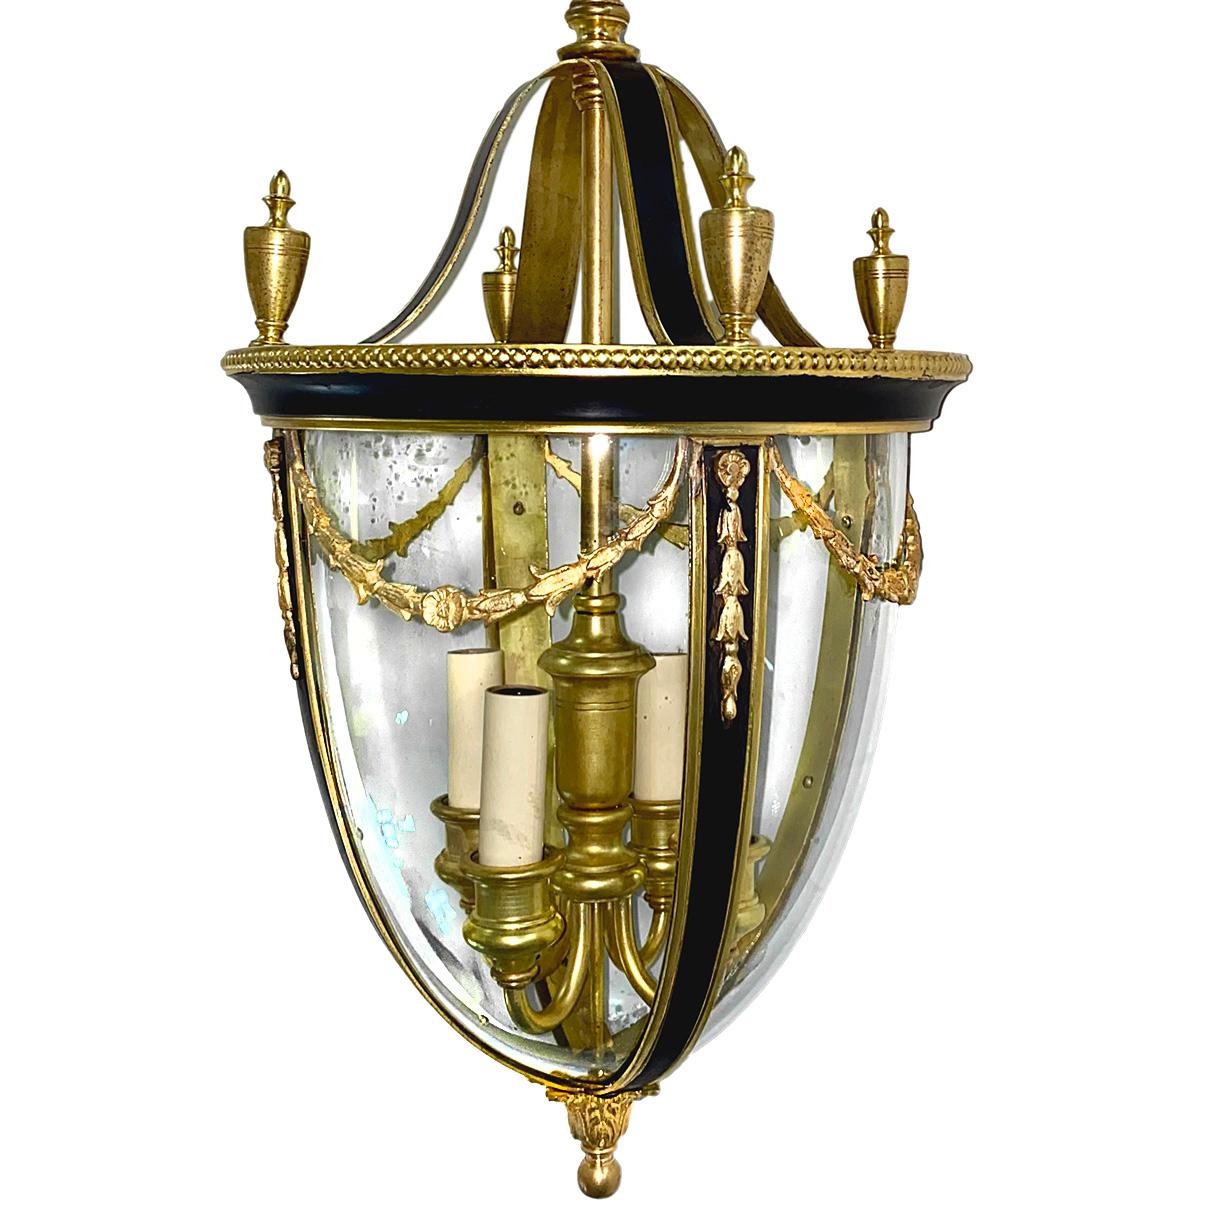 A circa 1920's gilt bronze lantern with painted details.

Measurements:
Drop (adjustable): 29